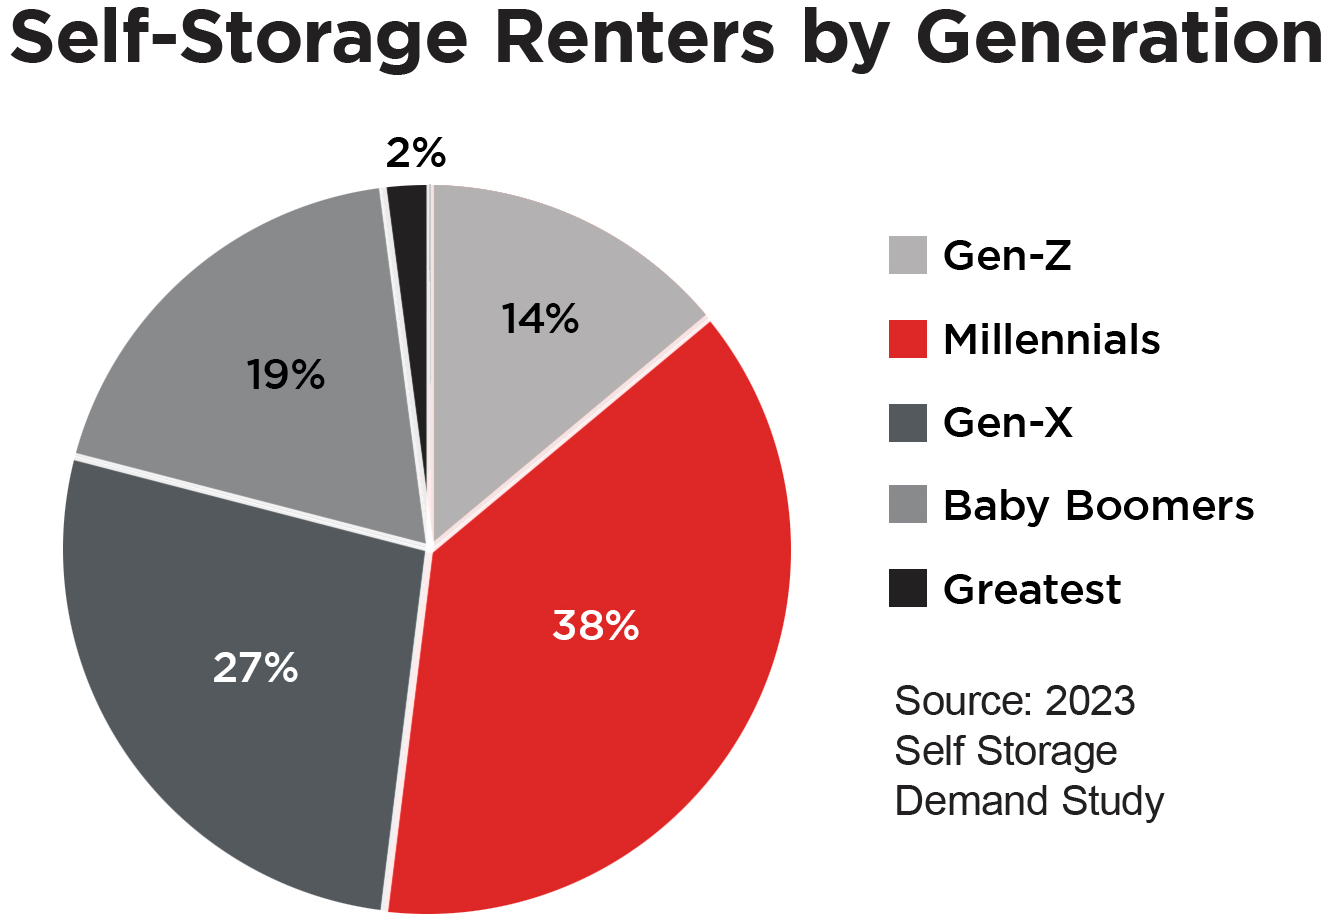 Pie chart breakdown of self-storage renters by generation